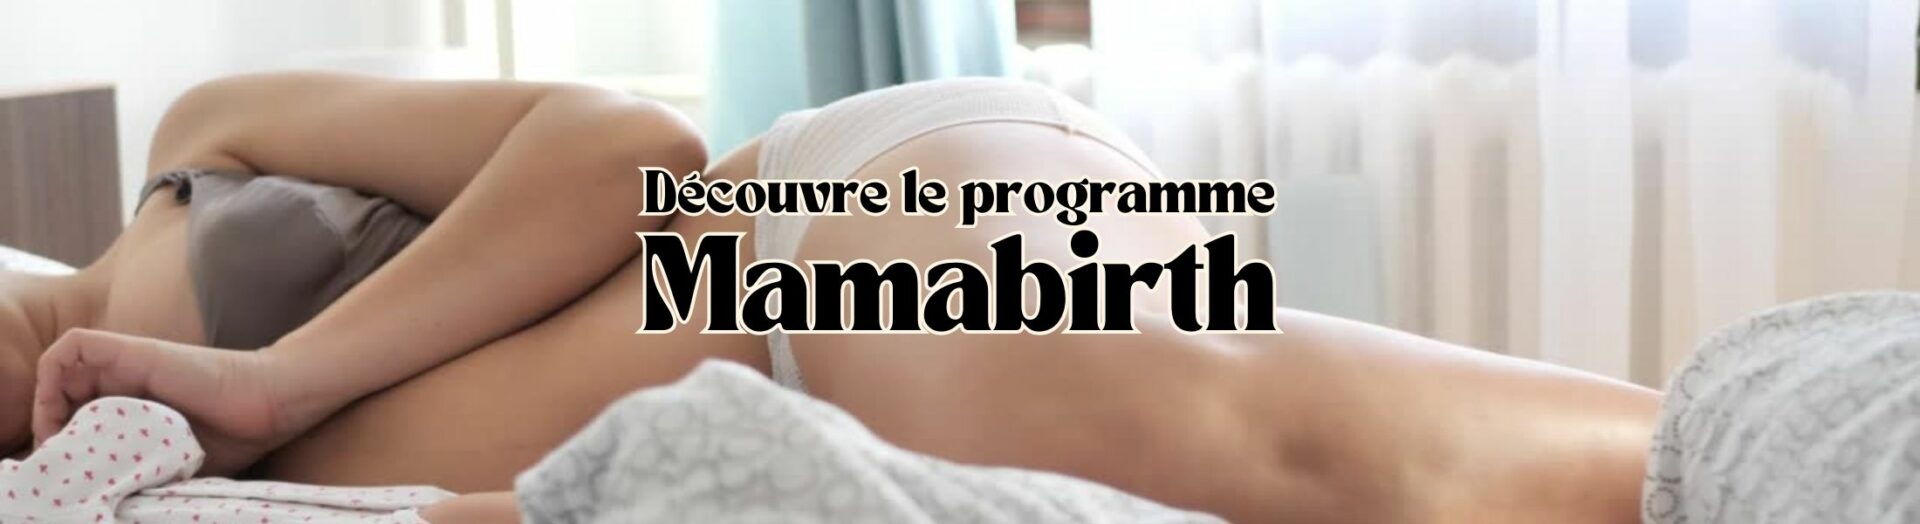 header_mamabirth